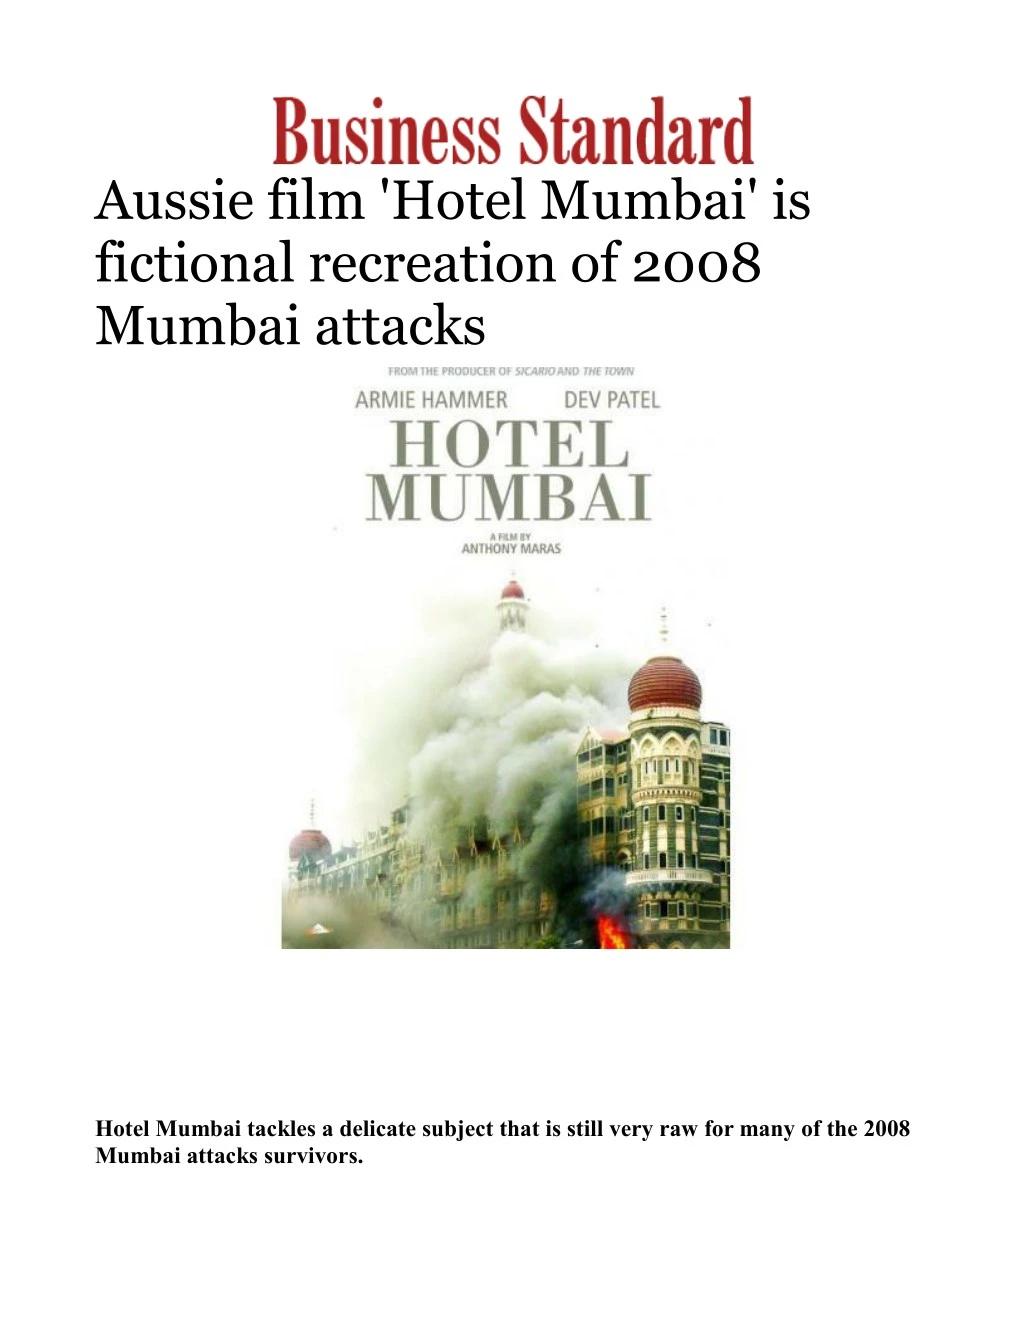 aussie film hotel mumbai is fictional recreation